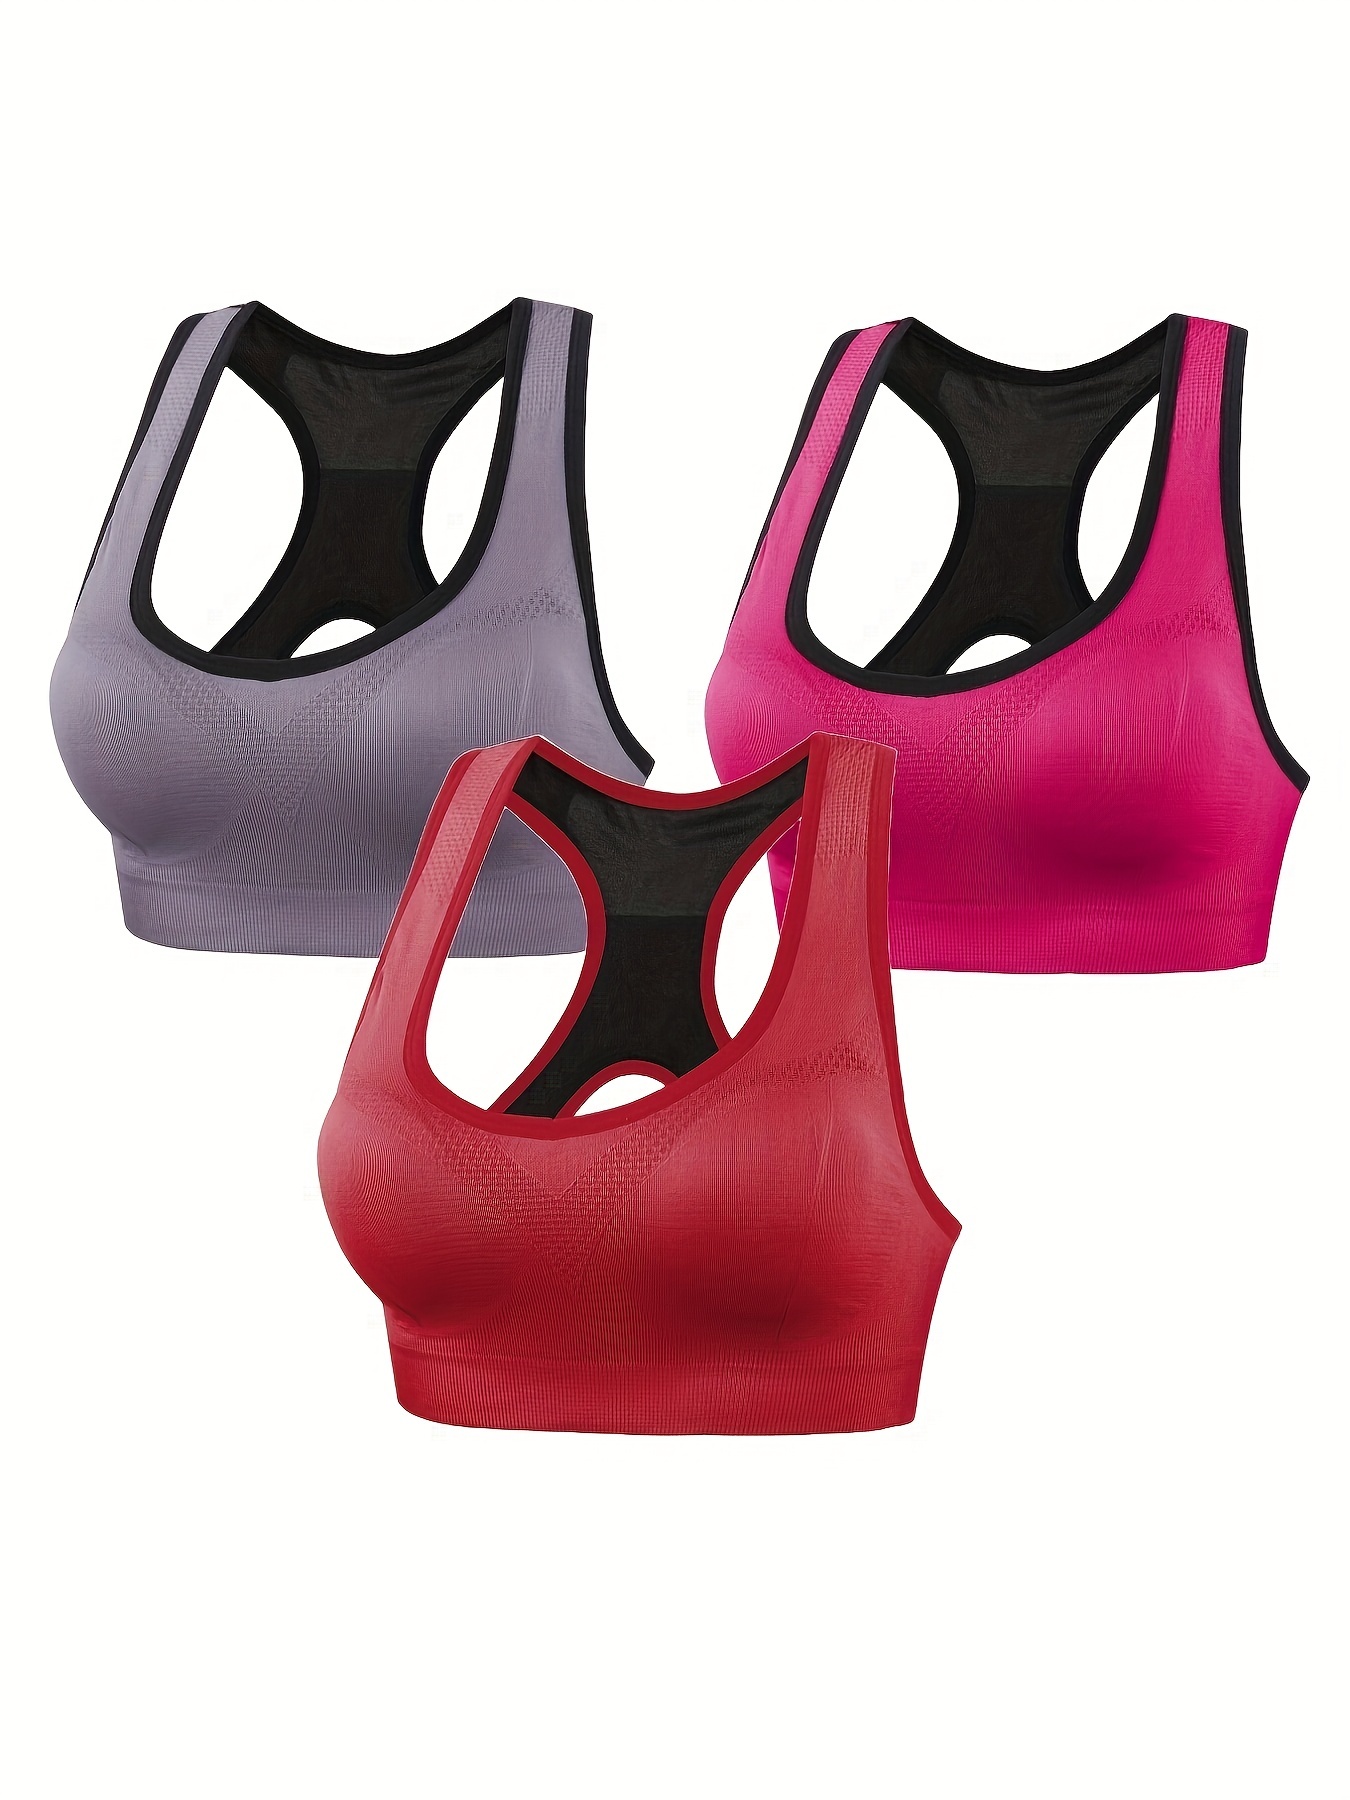 Women's Push Up Bra Grils Sport Bralettes Workout Tank Tops Yoga